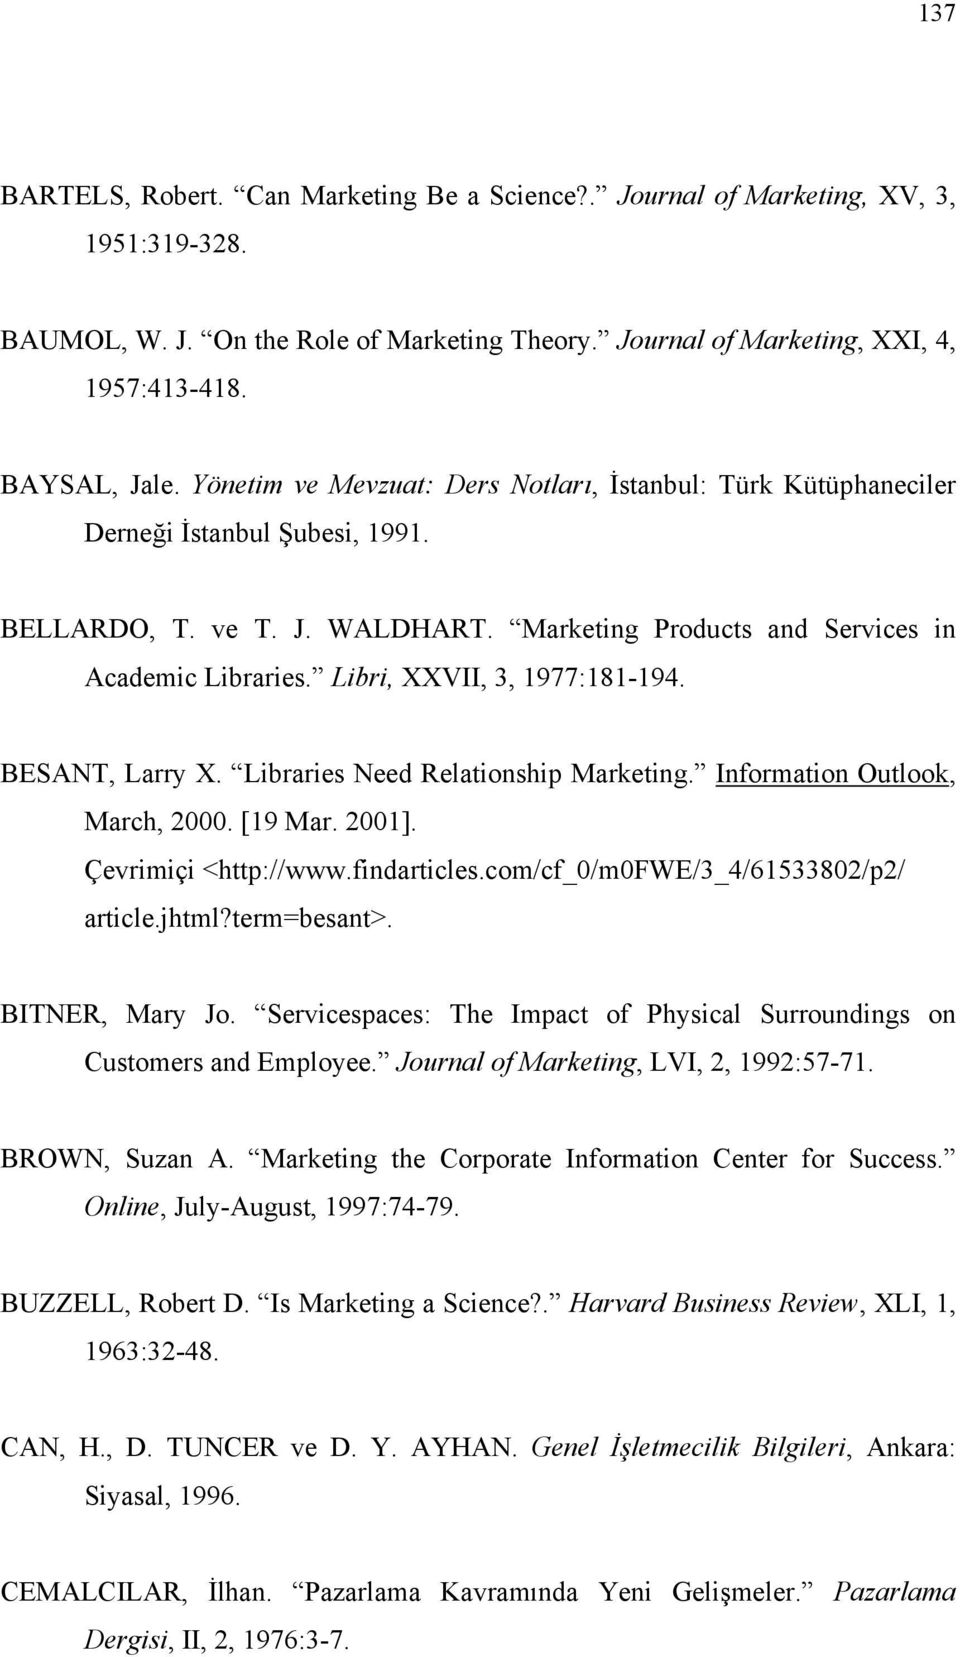 Libri, XXVII, 3, 1977:181-194. BESANT, Larry X. Libraries Need Relationship Marketing. Information Outlook, March, 2000. [19 Mar. 2001]. Çevrimiçi <http://www.findarticles.